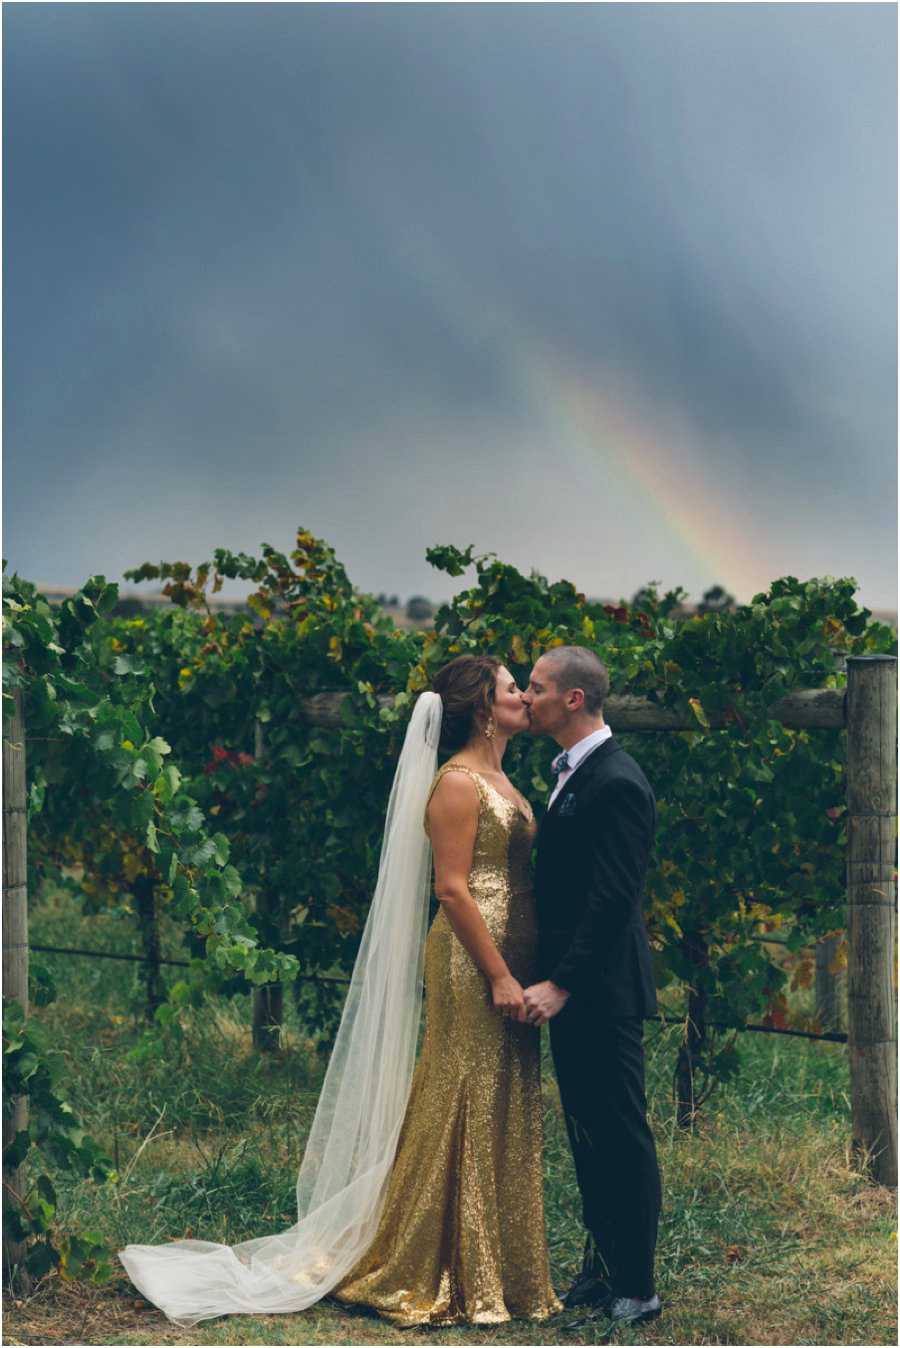 Yarra Valley wedding venues - Bride and Groom kissing with rainbow